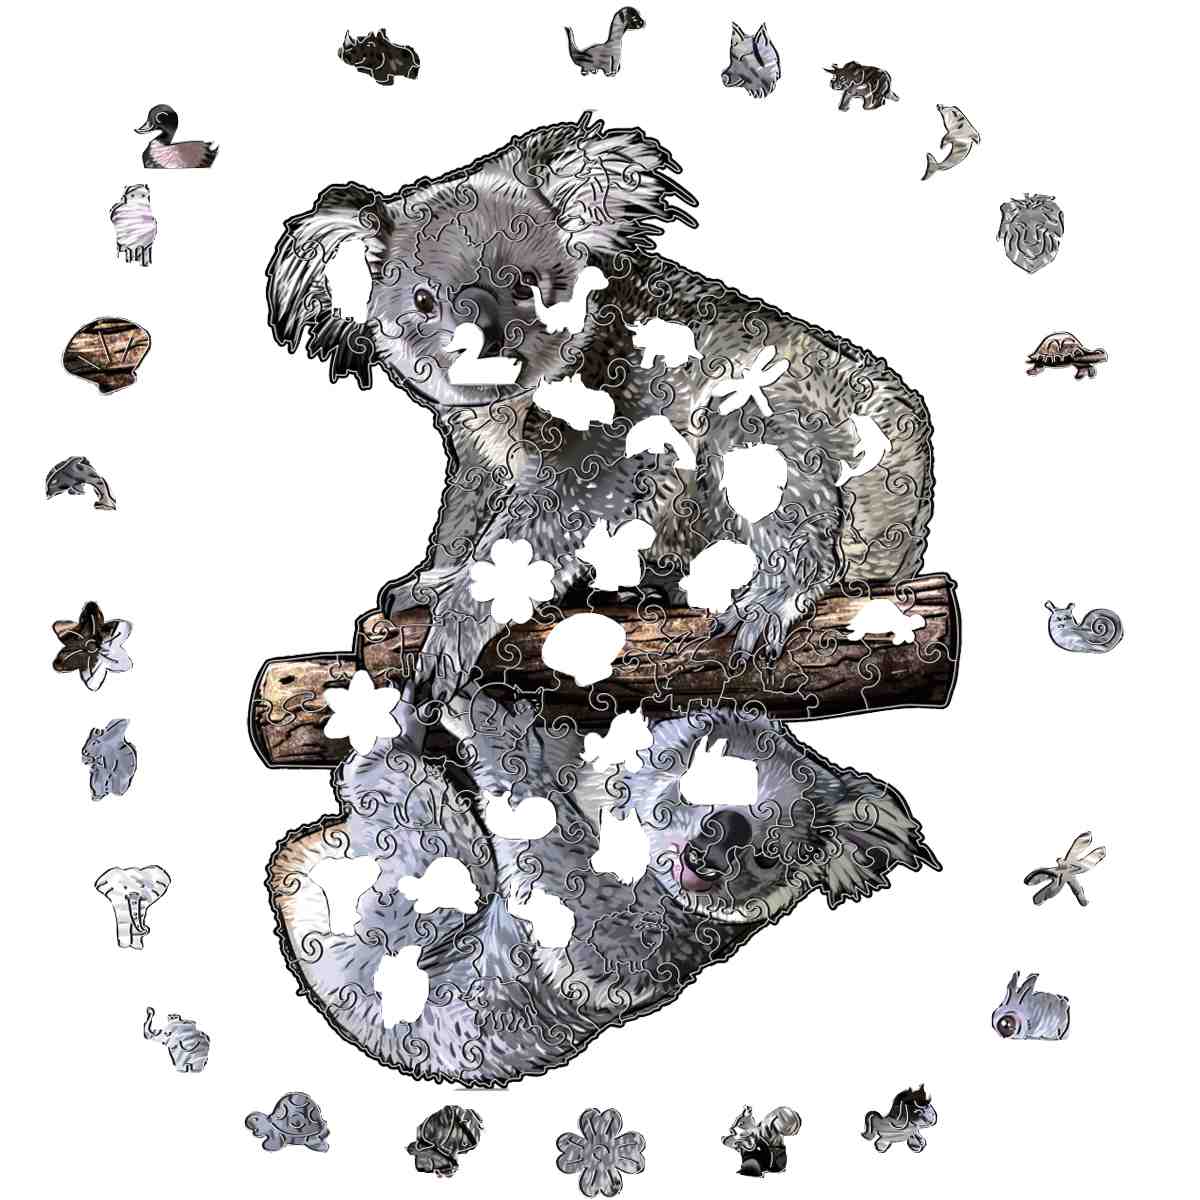 Koala - Wooden Jigsaw Puzzle